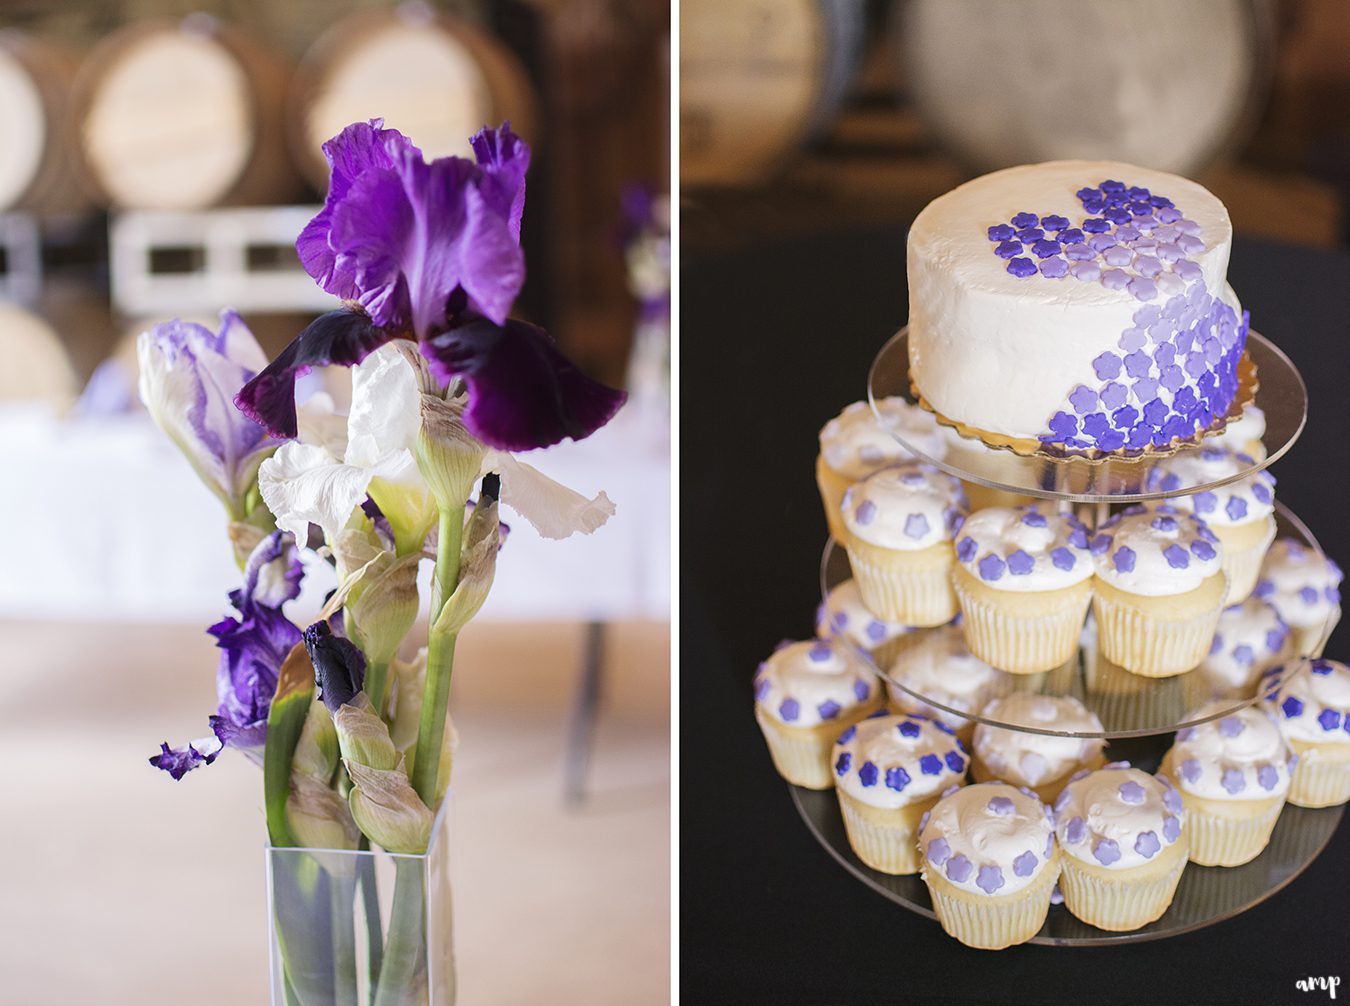 Purple irises and wedding cake with cupcakes